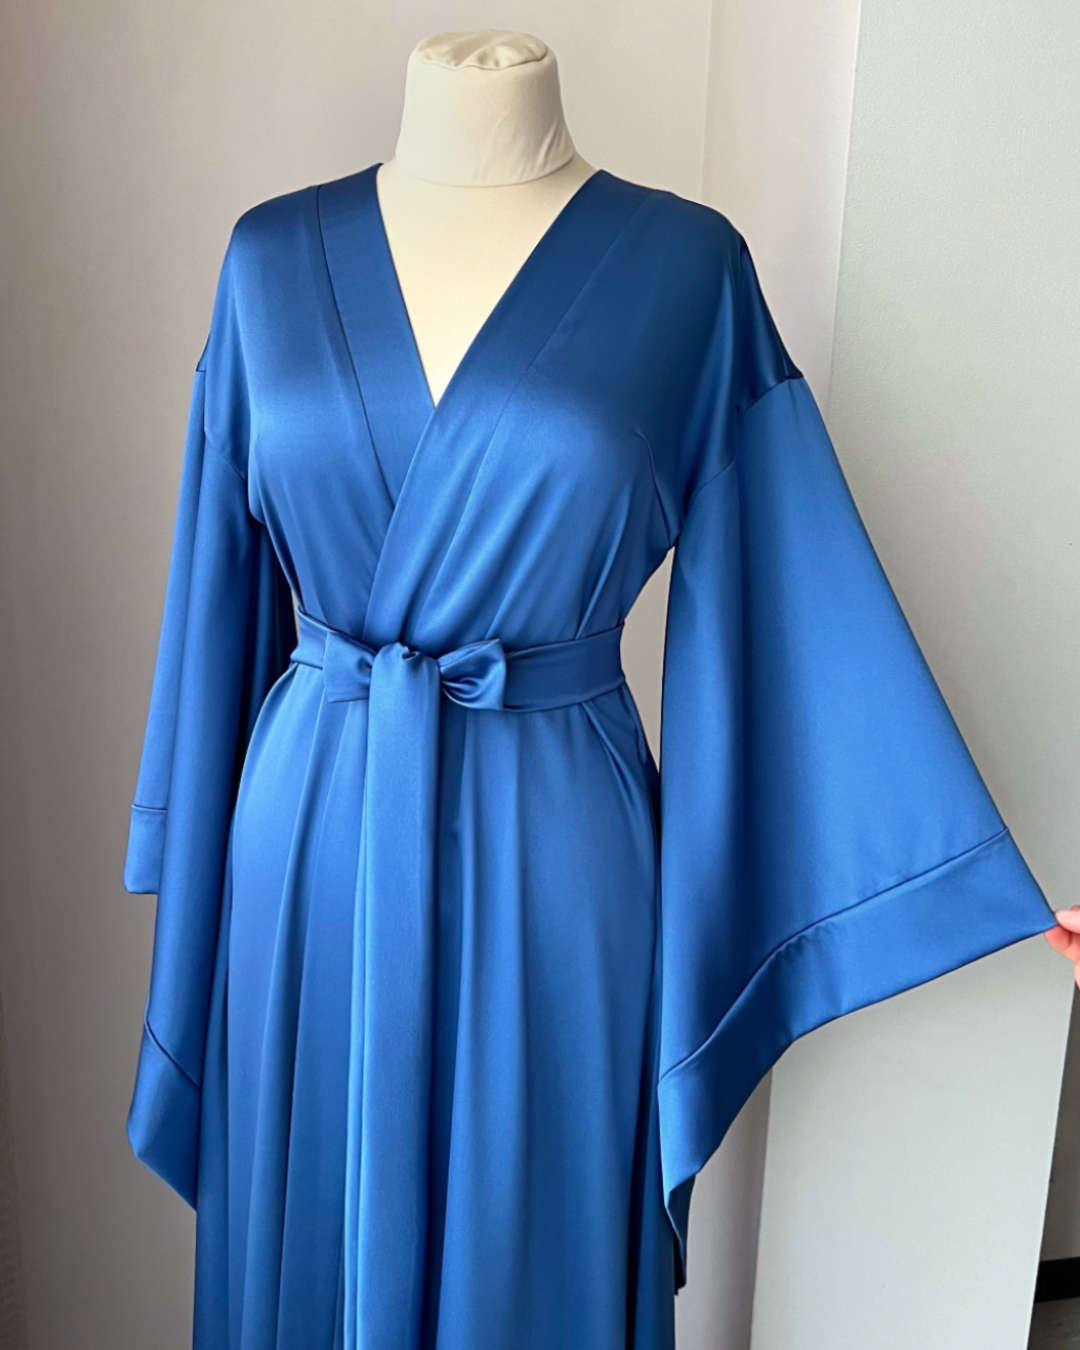 a woman's blue dress on a mannequin